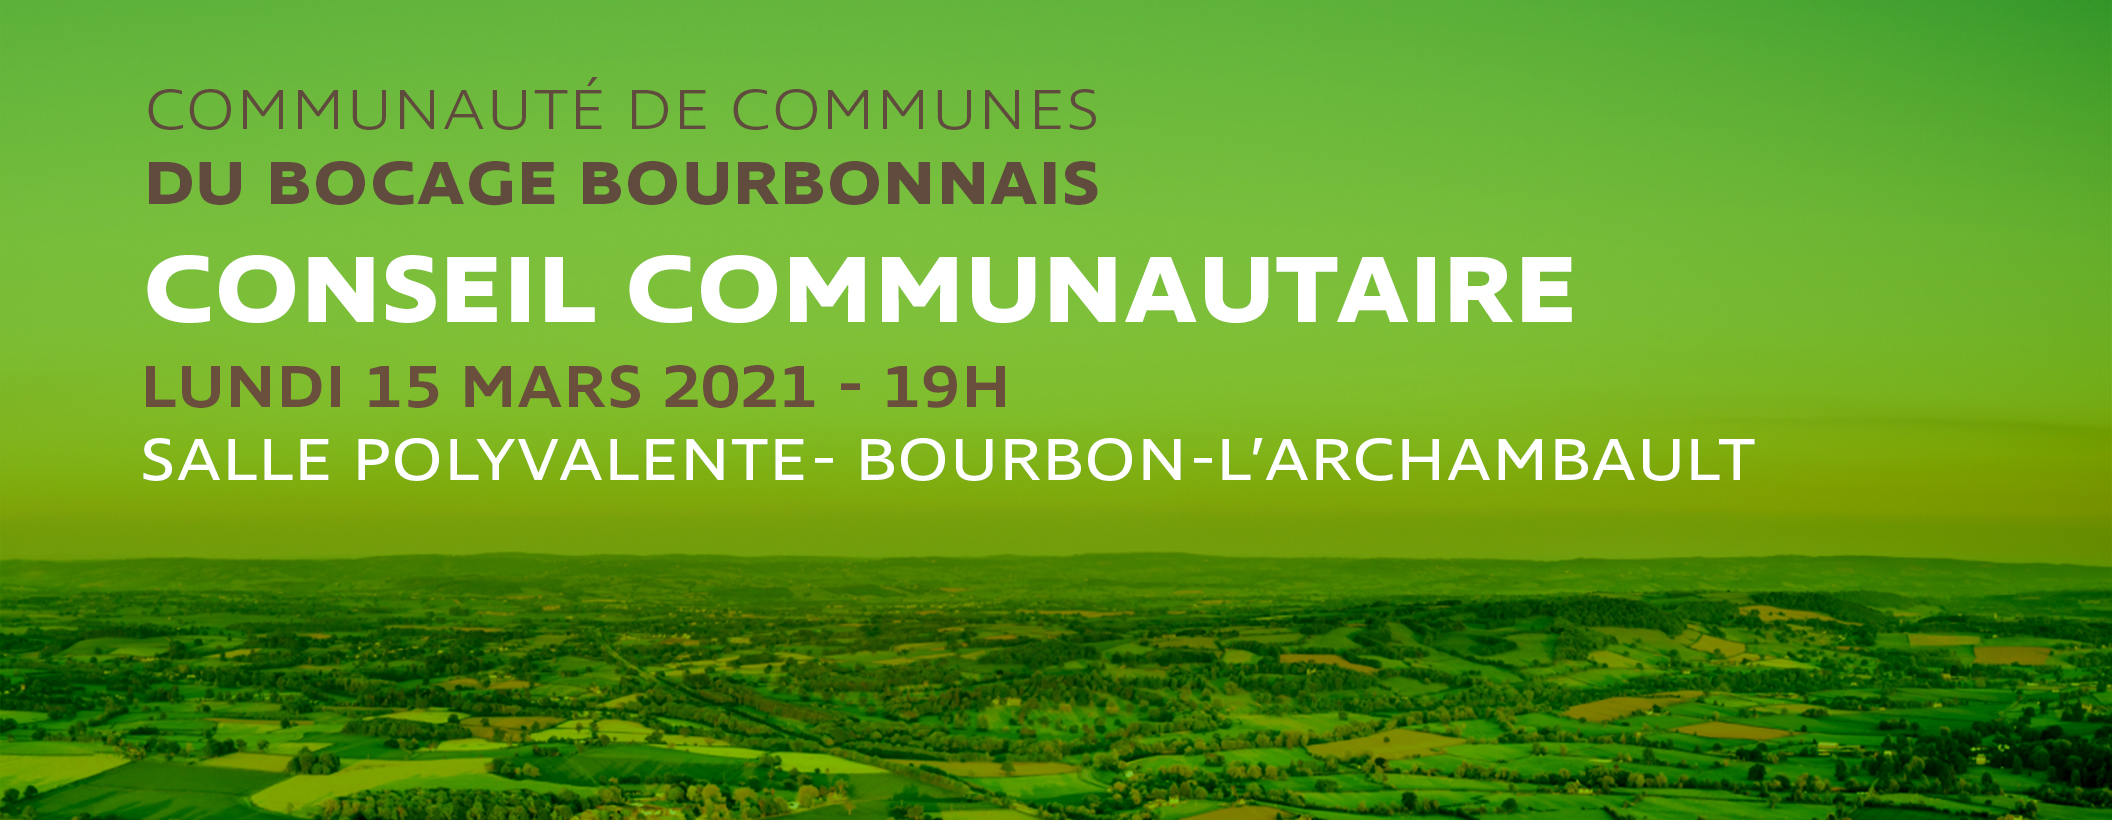 Prochain Conseil Communautaire : lundi 15 mars à Bourbon-l'Archambault